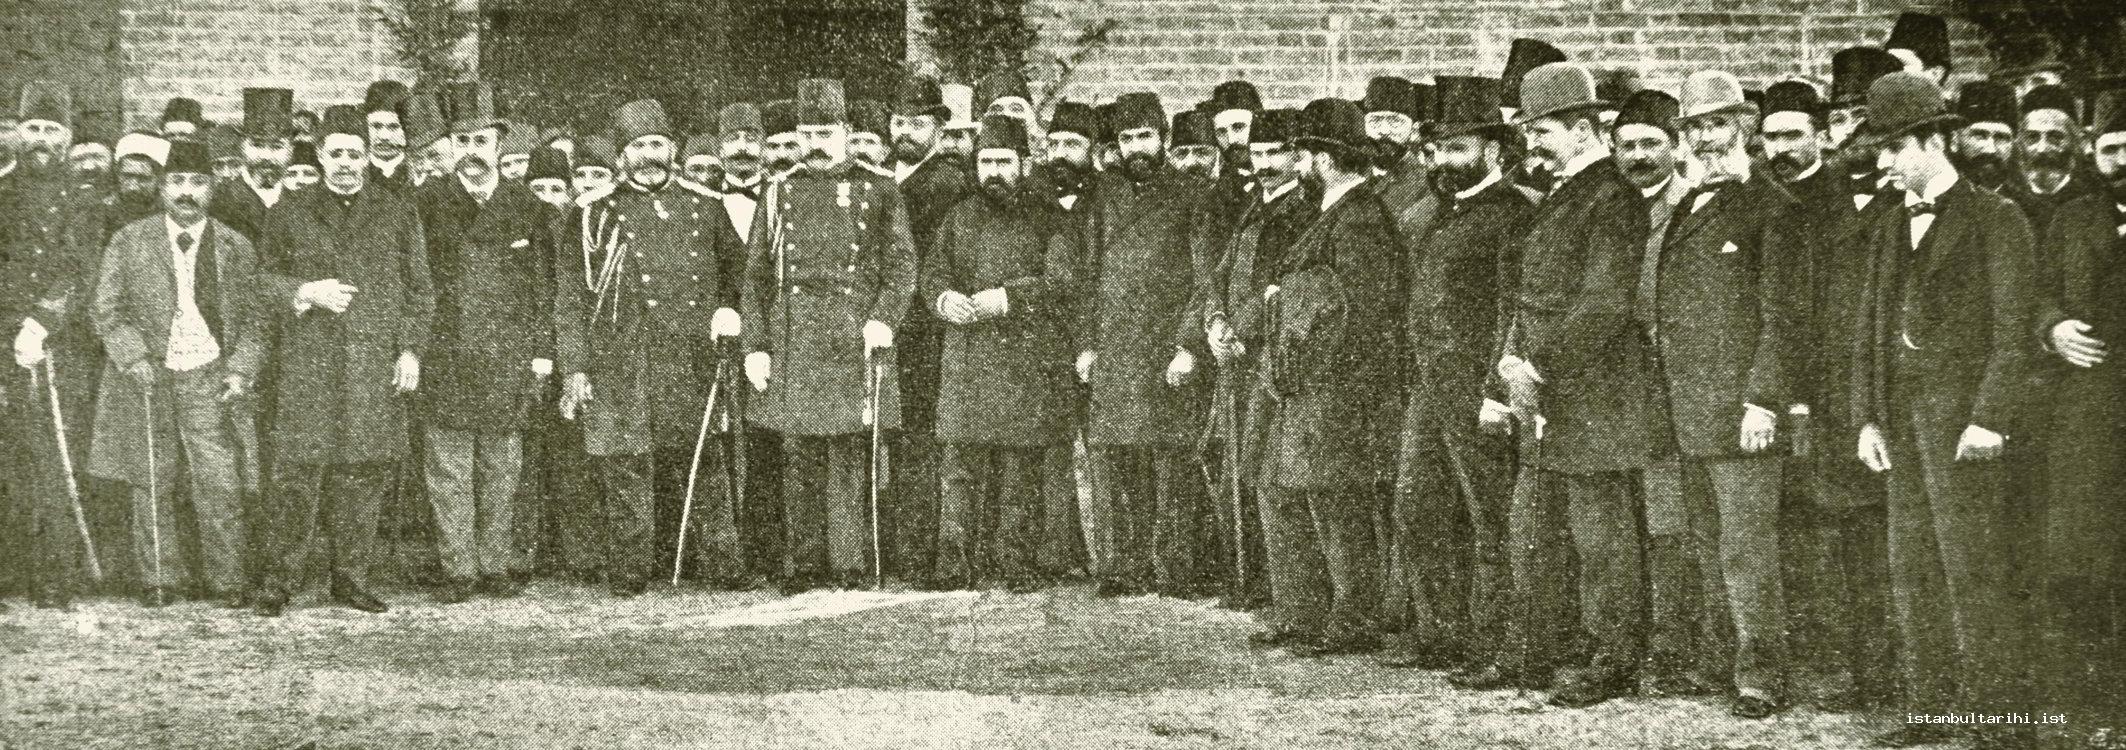 3-Tenvir-i Şehr-i İstanbul Şirket-i Osmaniyesi’nin açılışı